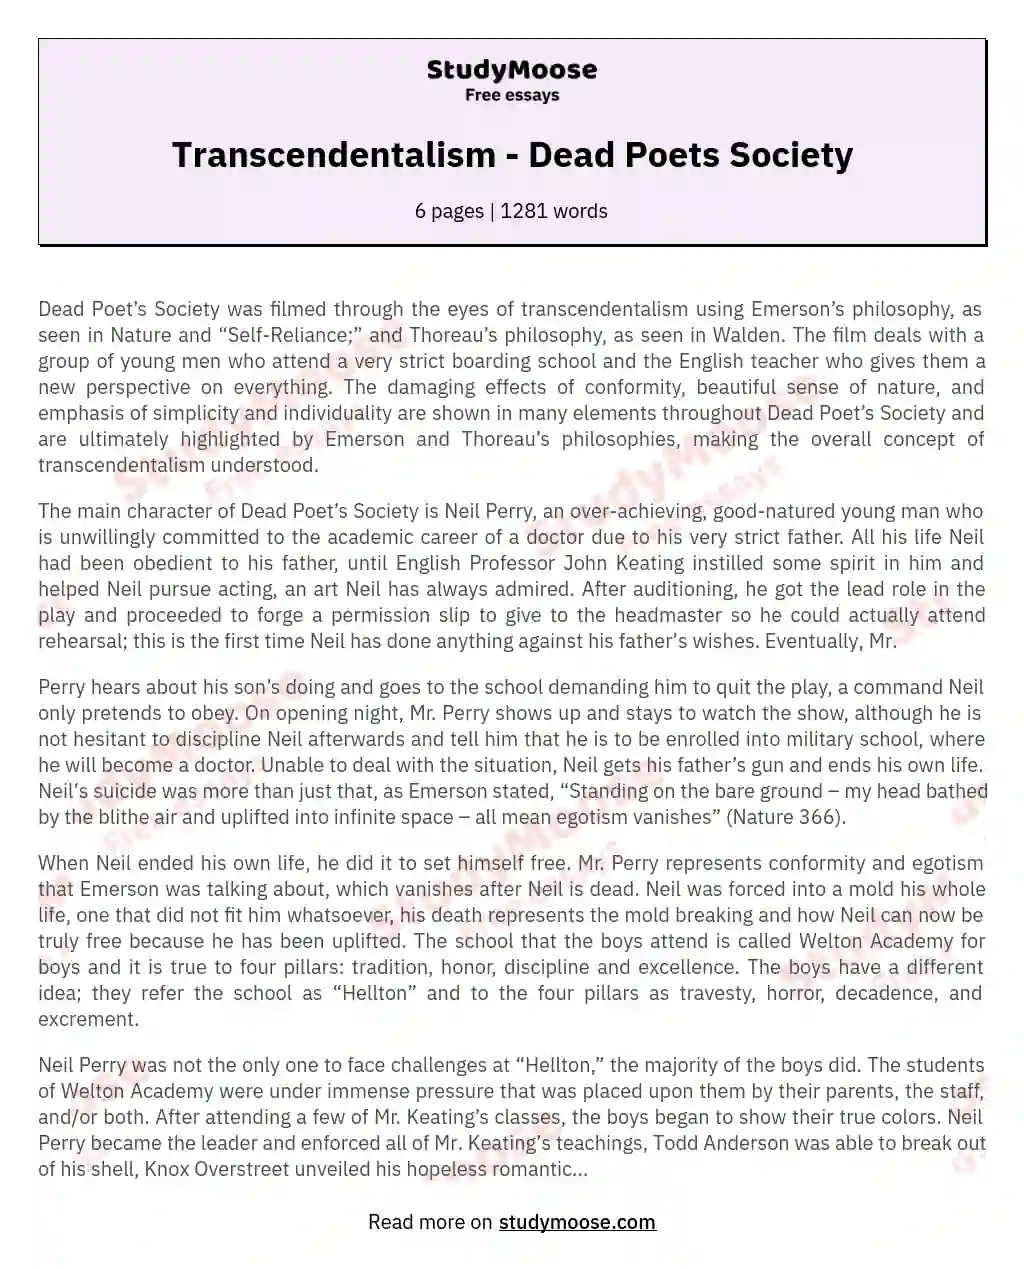 transcendentalism in today's society essay